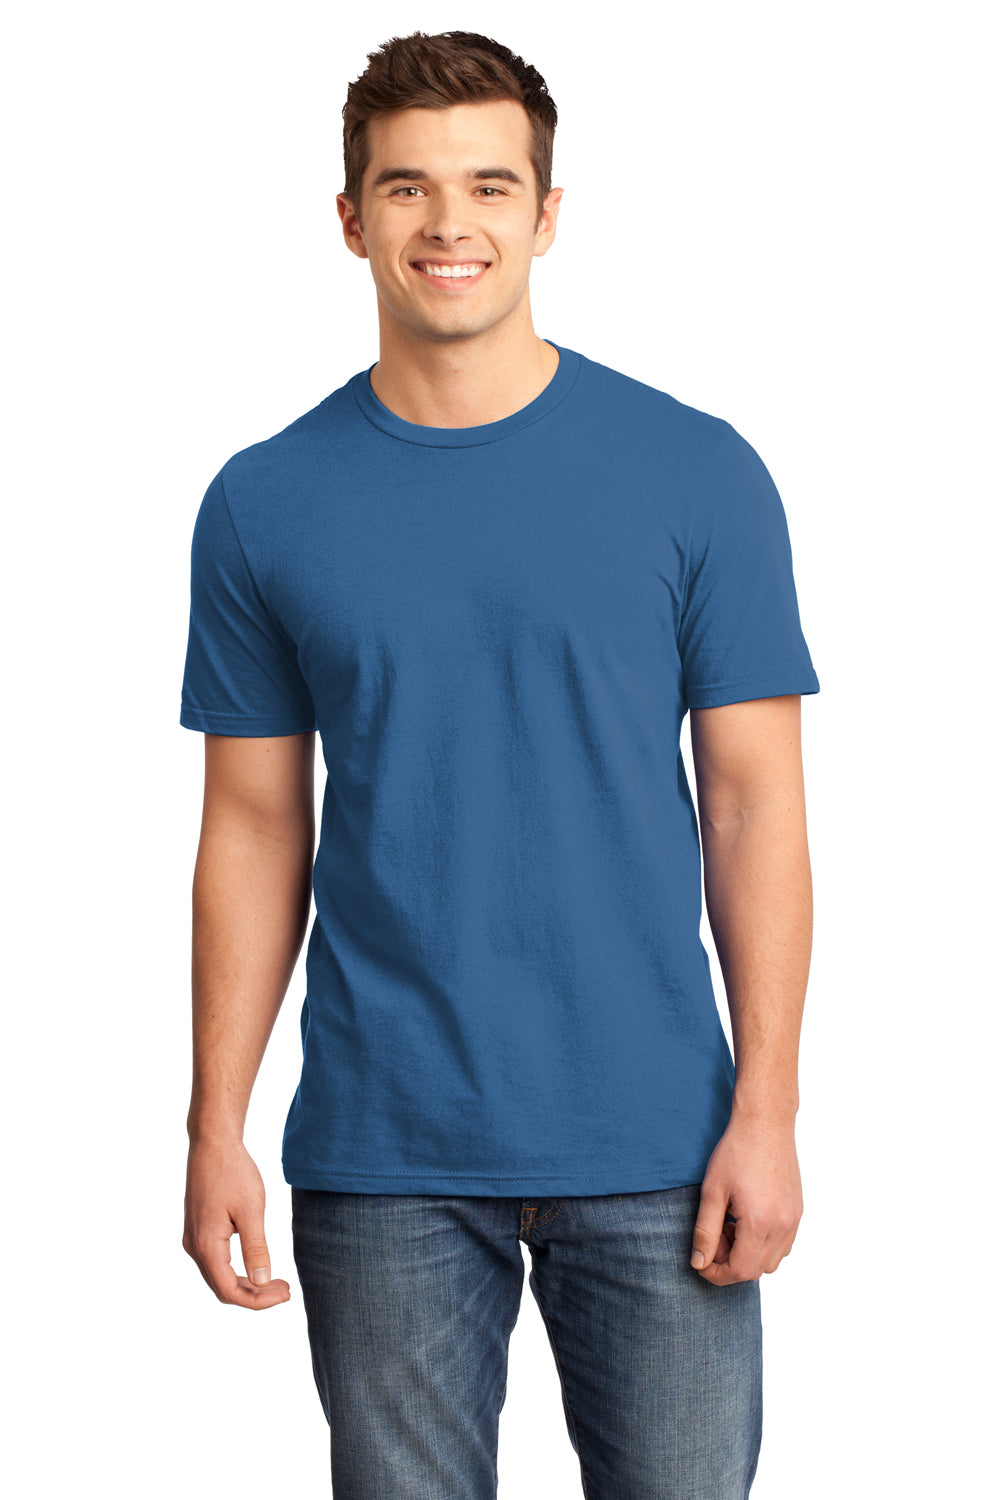 District DT6000 Mens Very Important Short Sleeve Crewneck T-Shirt Maritime Blue Front